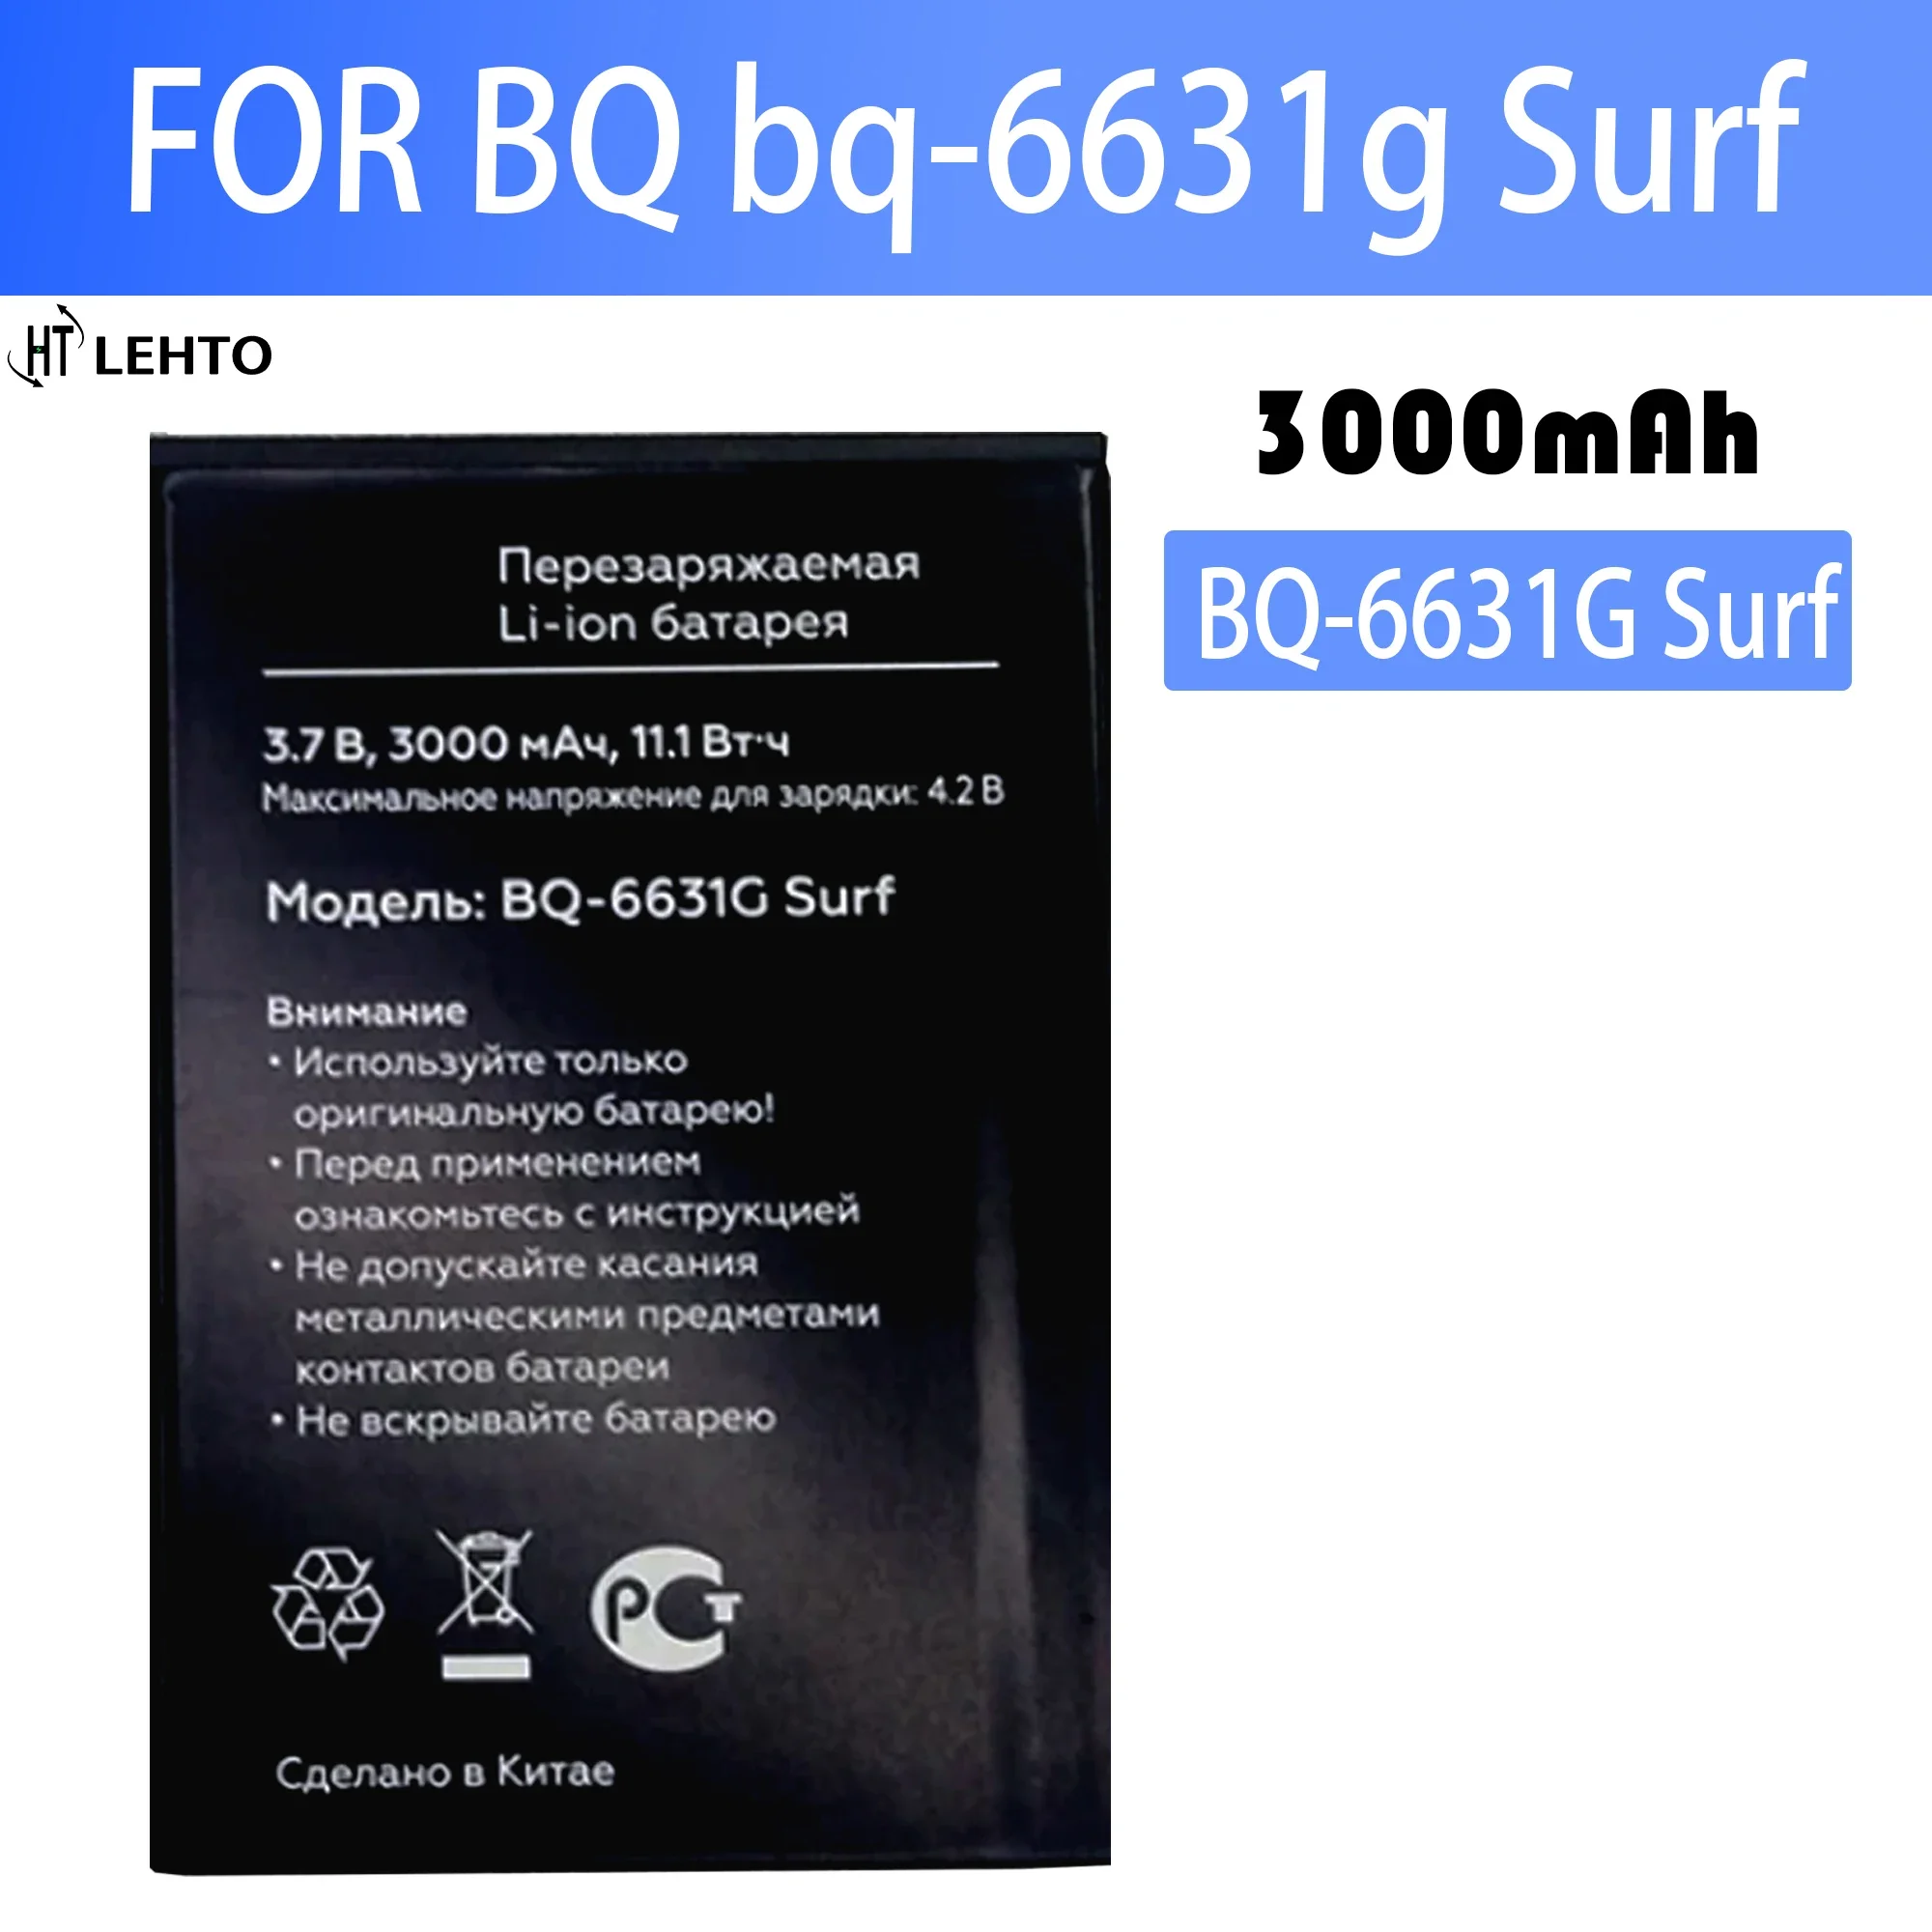 

New Original FOR BQ bq-6631g Surf Battery